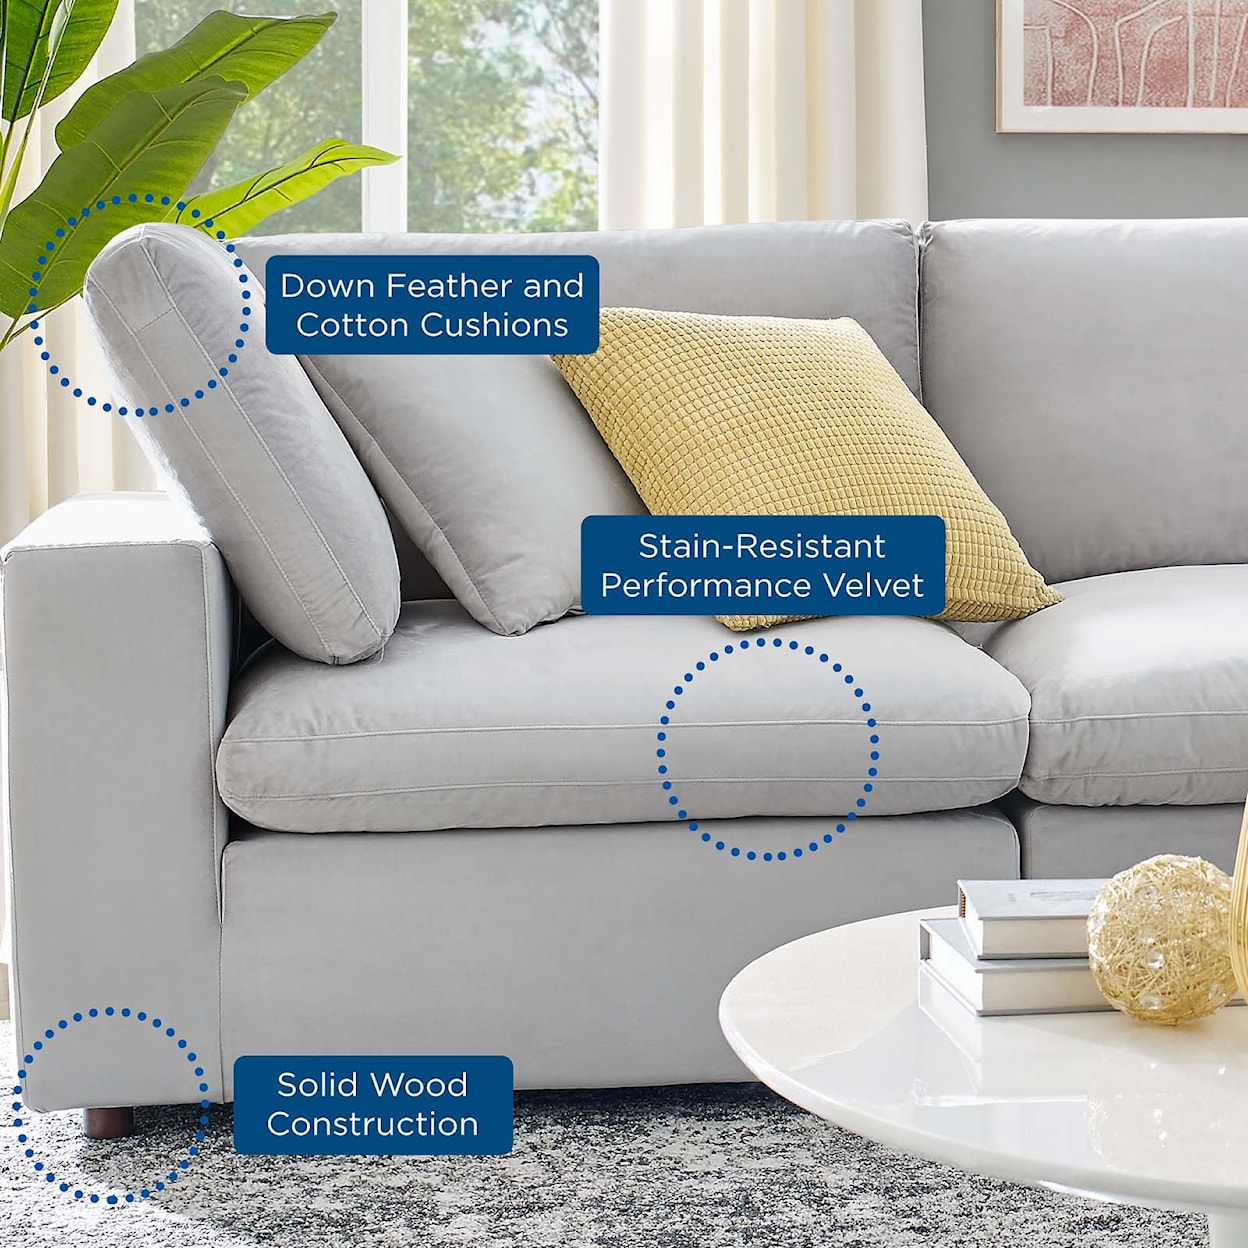 Modway Commix 5-Piece Sectional Sofa